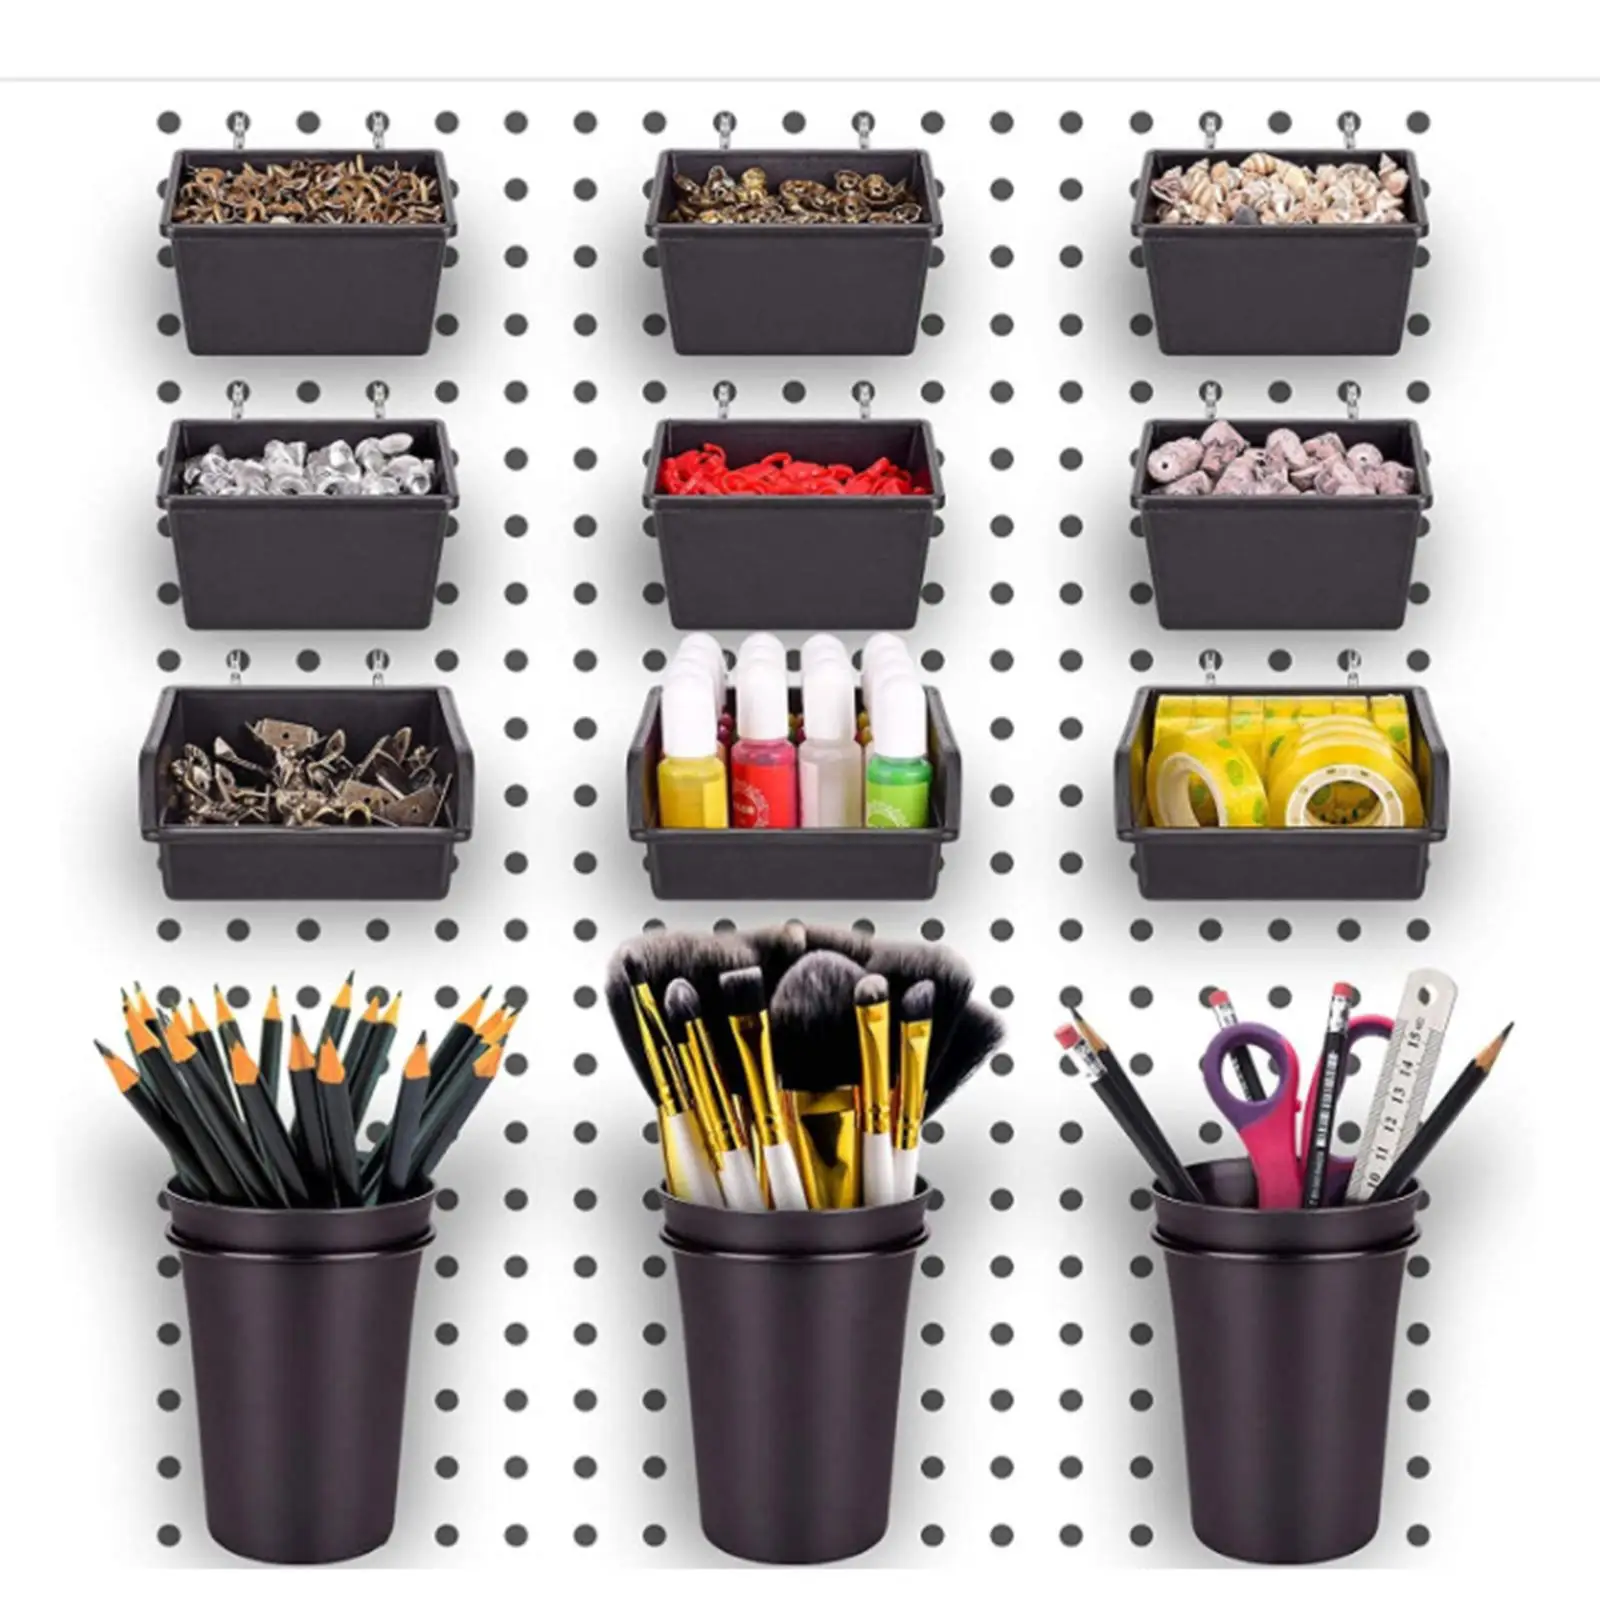 Organize Hardware Accessories Peg Board Hooks Accessories Pegboard Bins Organizer tool chest trolley